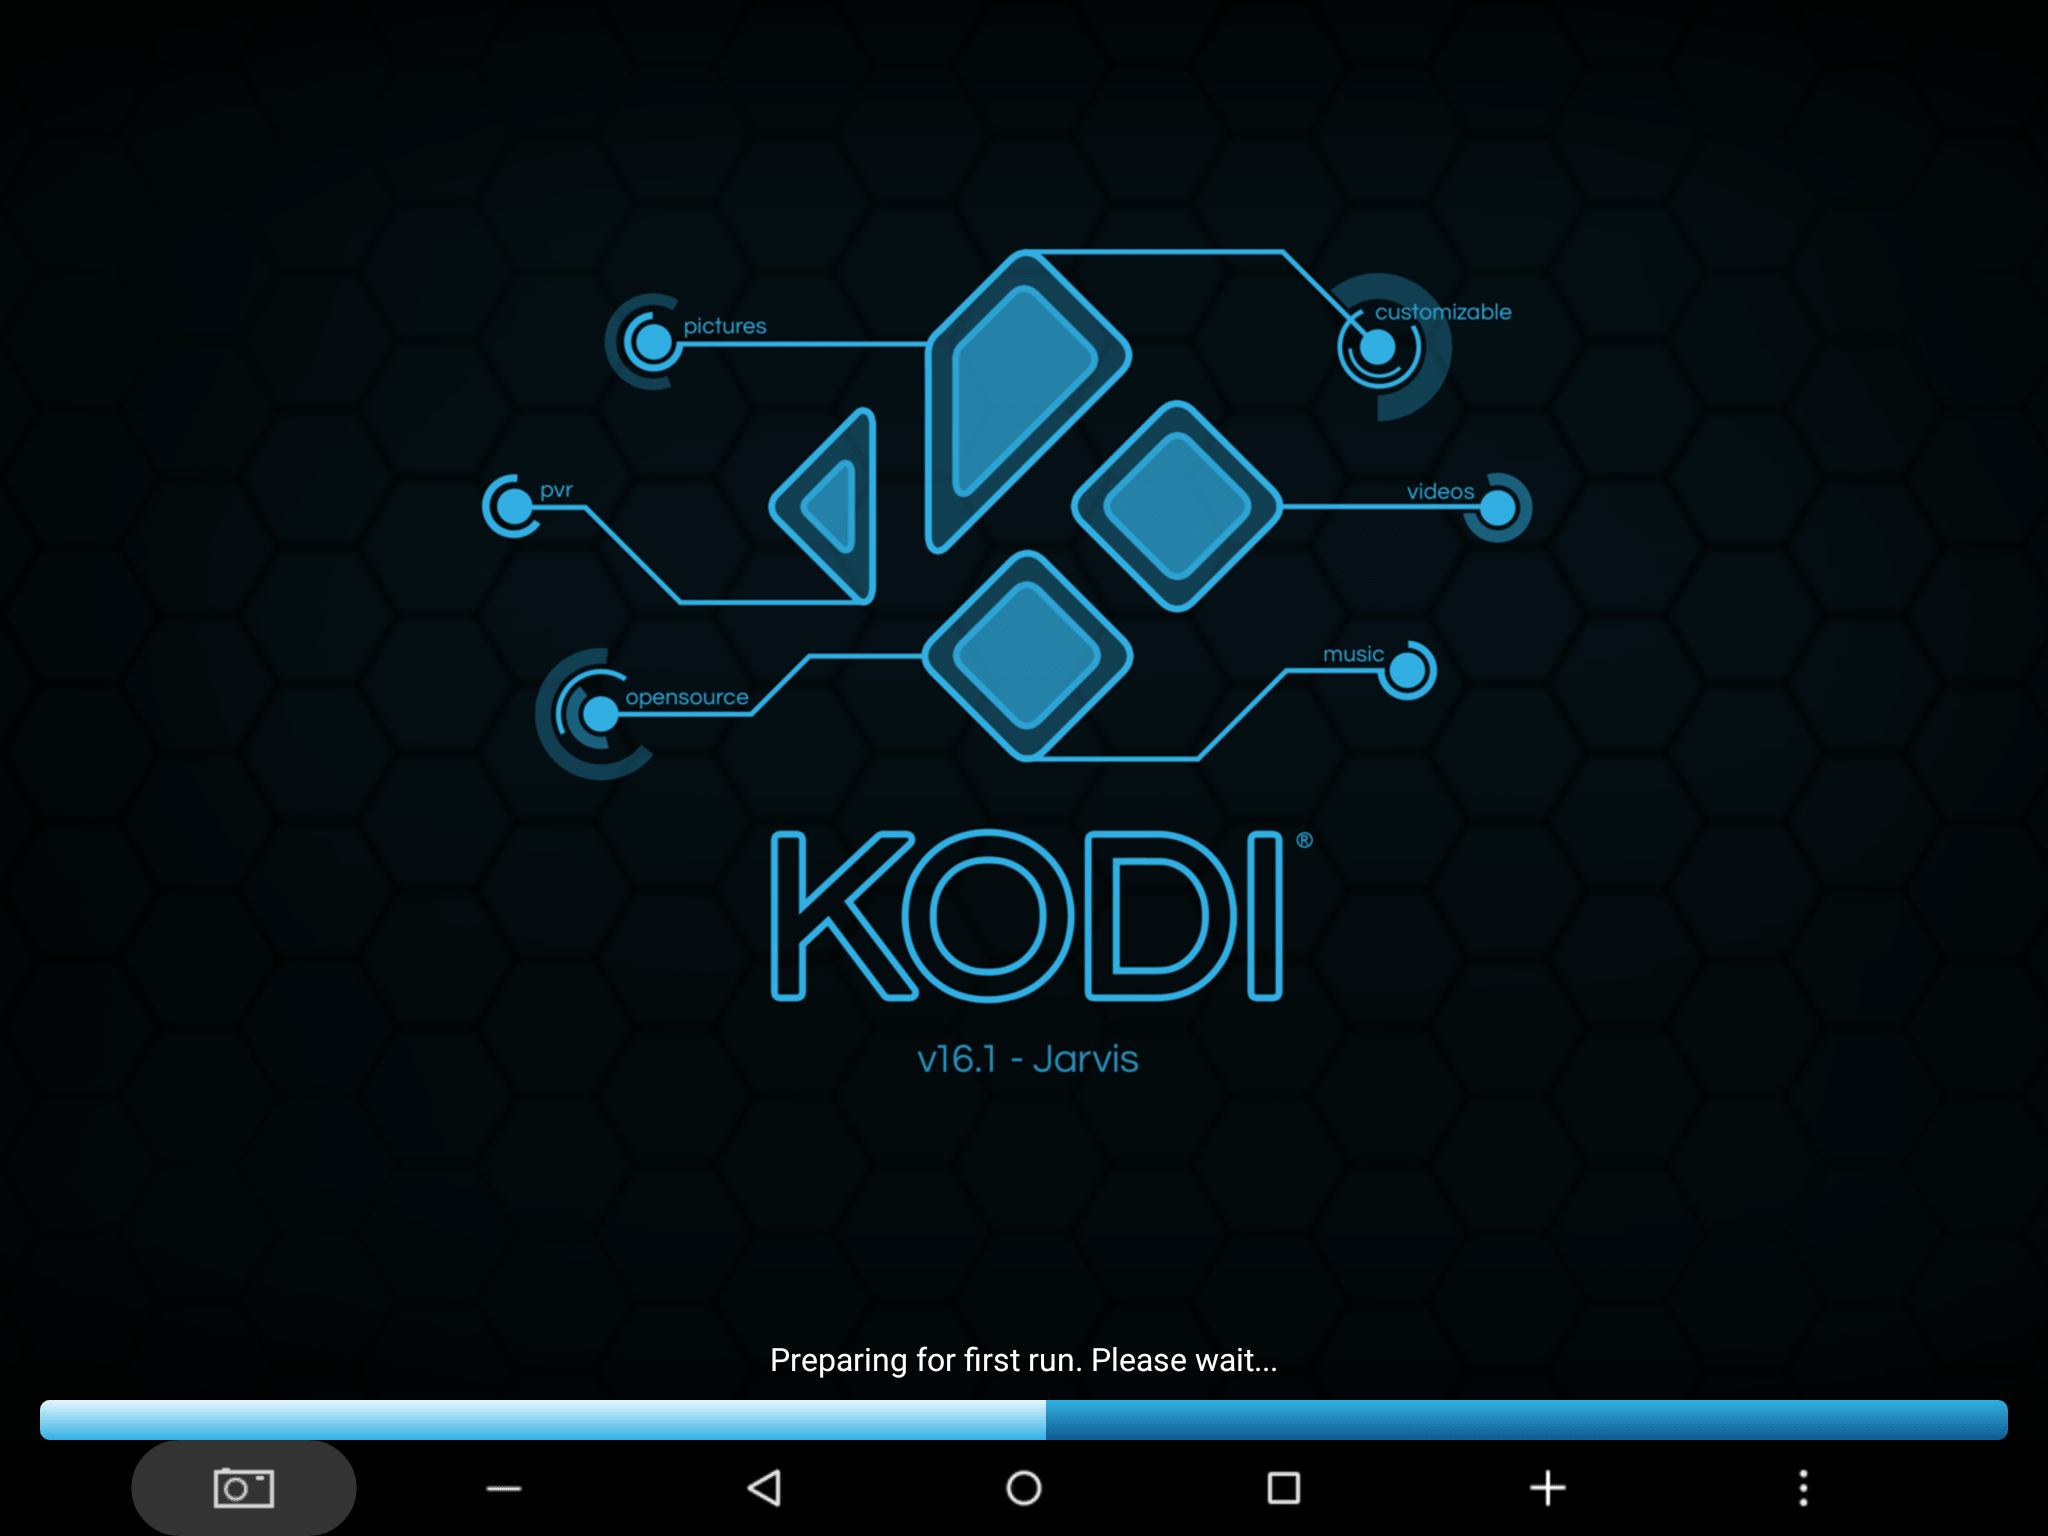 Upgrade to Kodi 16.1 and Install Wookie